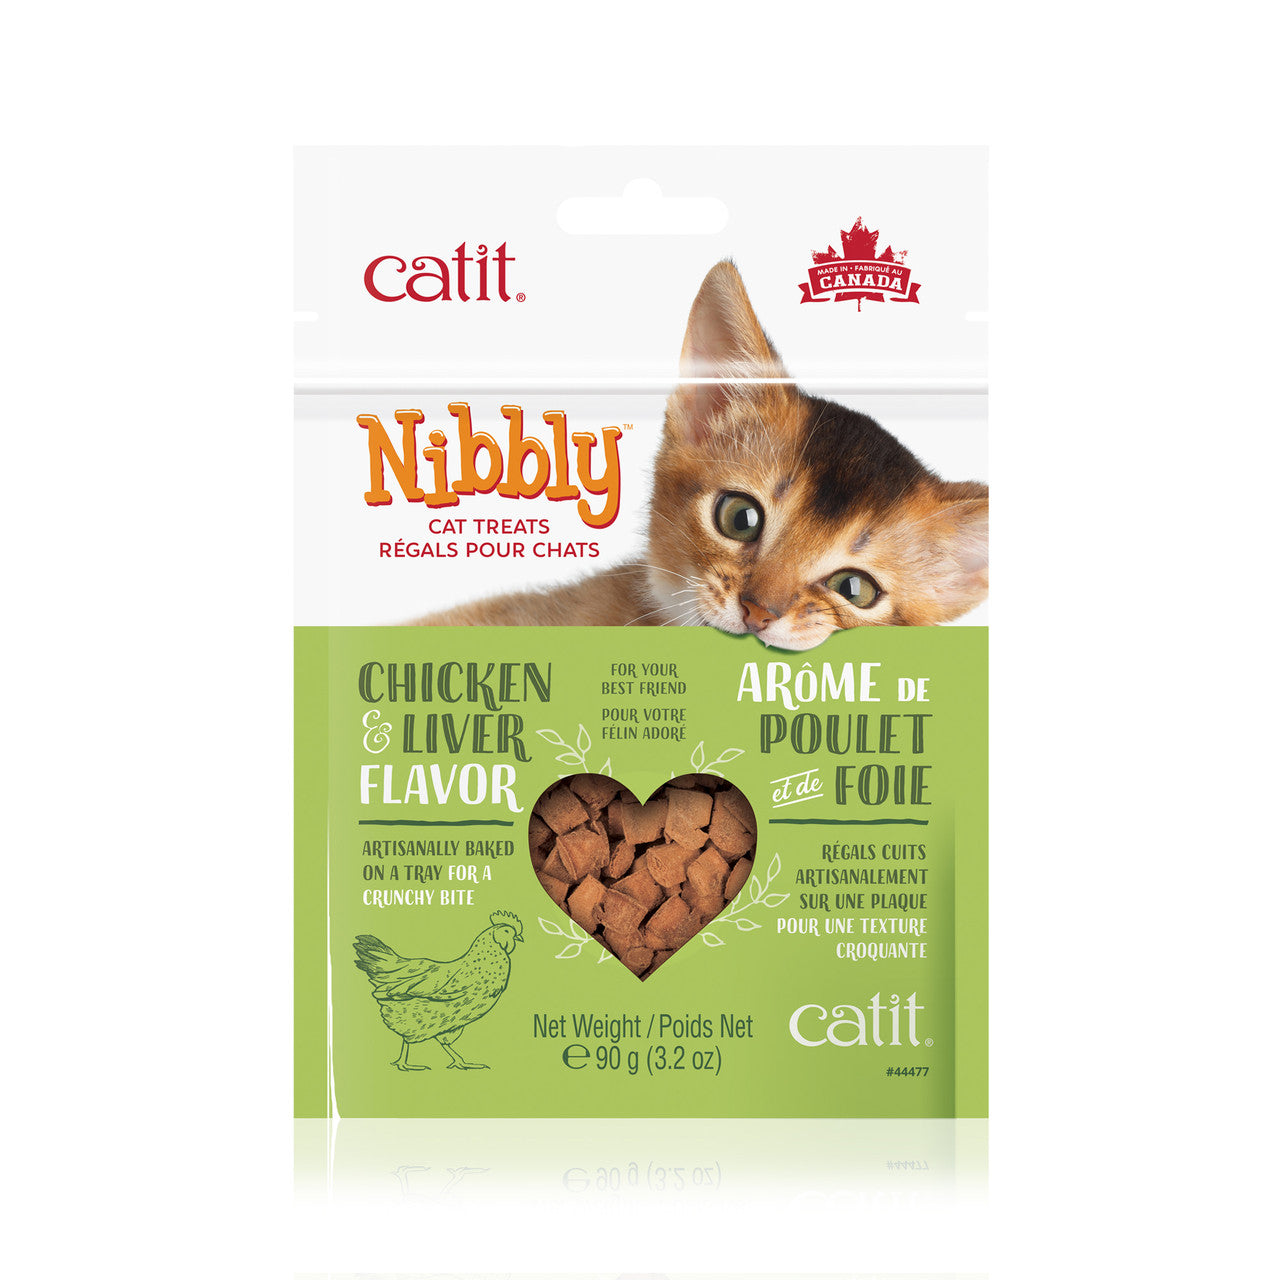 Catit Nibbly Cat Treats, Chicken/Liver Flavor 3.2 oz 022517444771